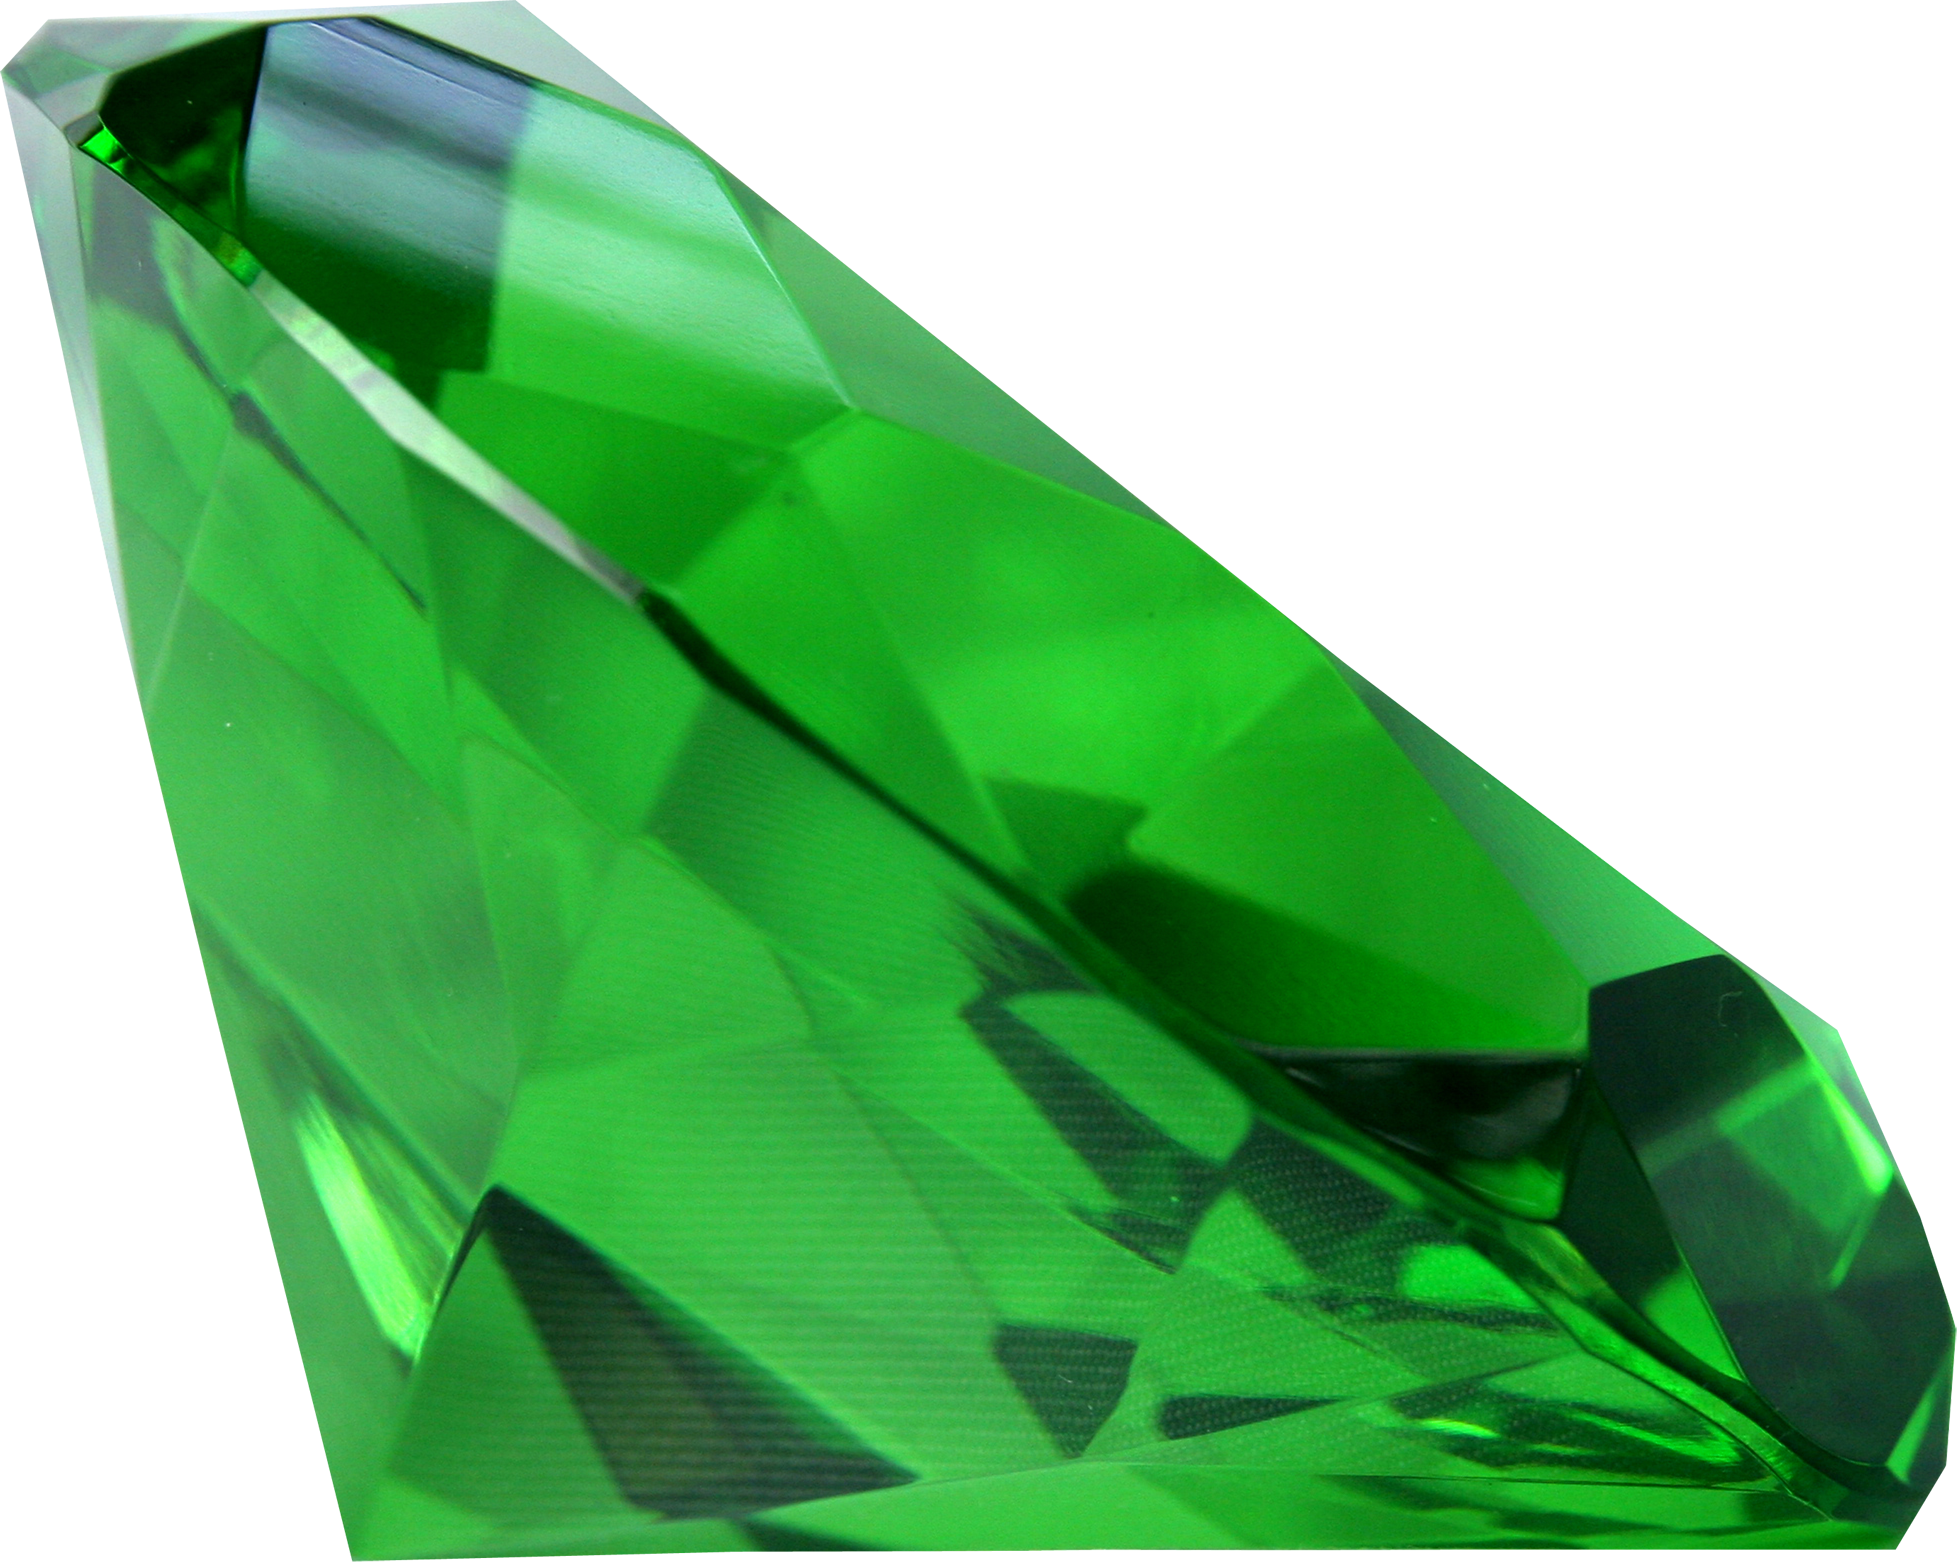 Stone Emerald Free HD Image PNG Image